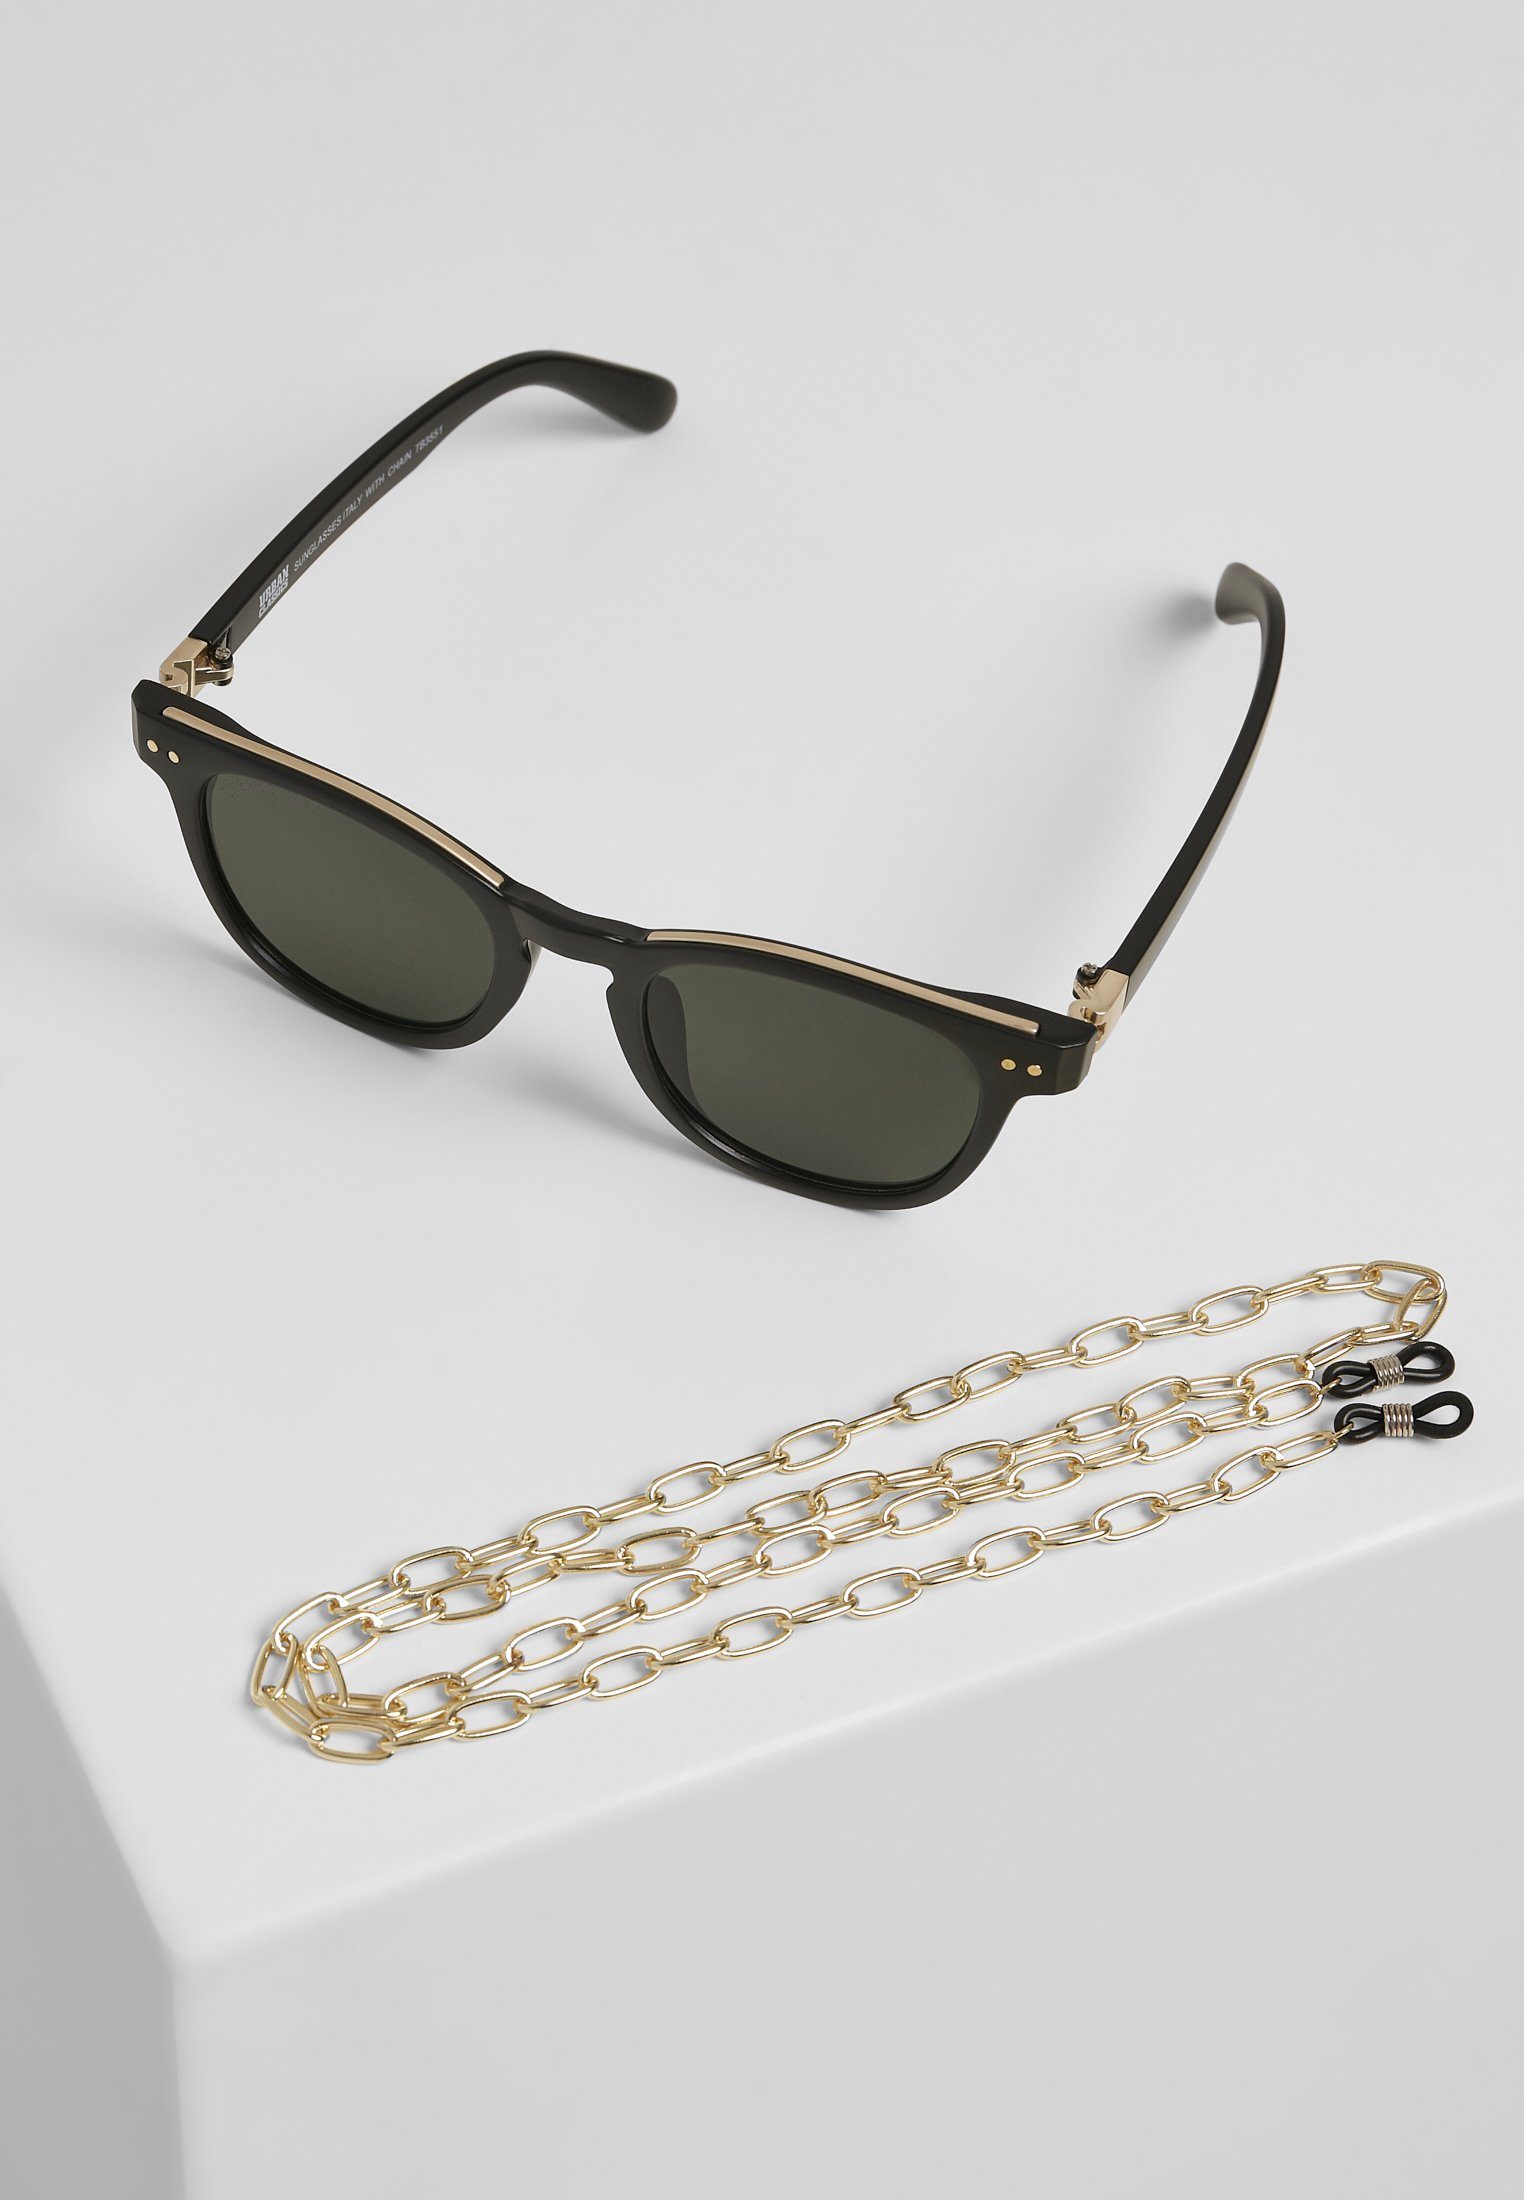 URBAN CLASSICS Sonnenbrille Unisex Sunglasses Italy with chain black/gold/gold | Sonnenbrillen